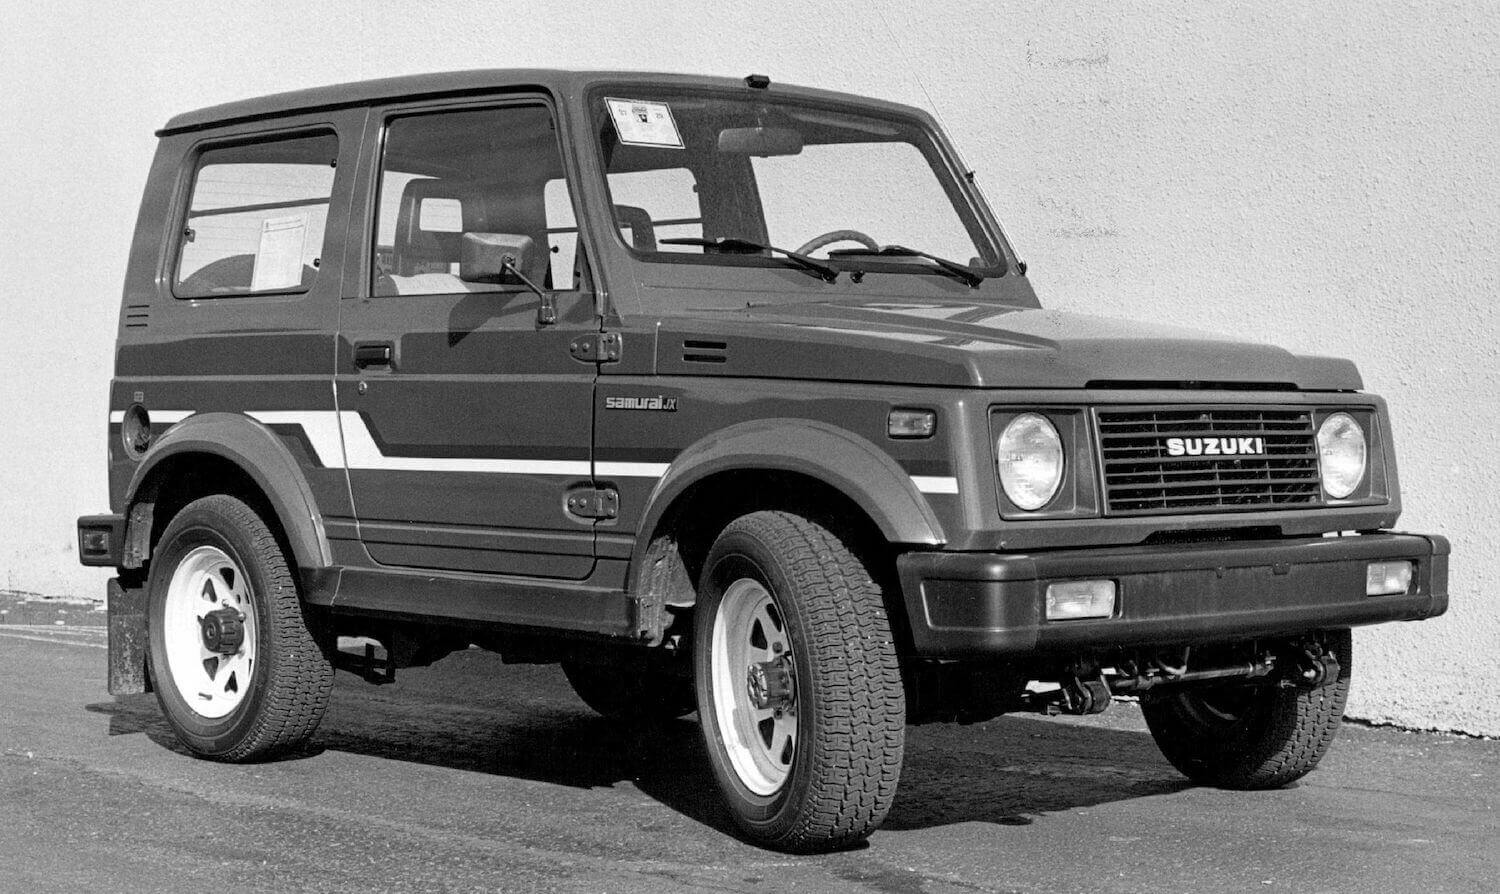 A black-and-white photo of the Suzuki Samurai from 1986